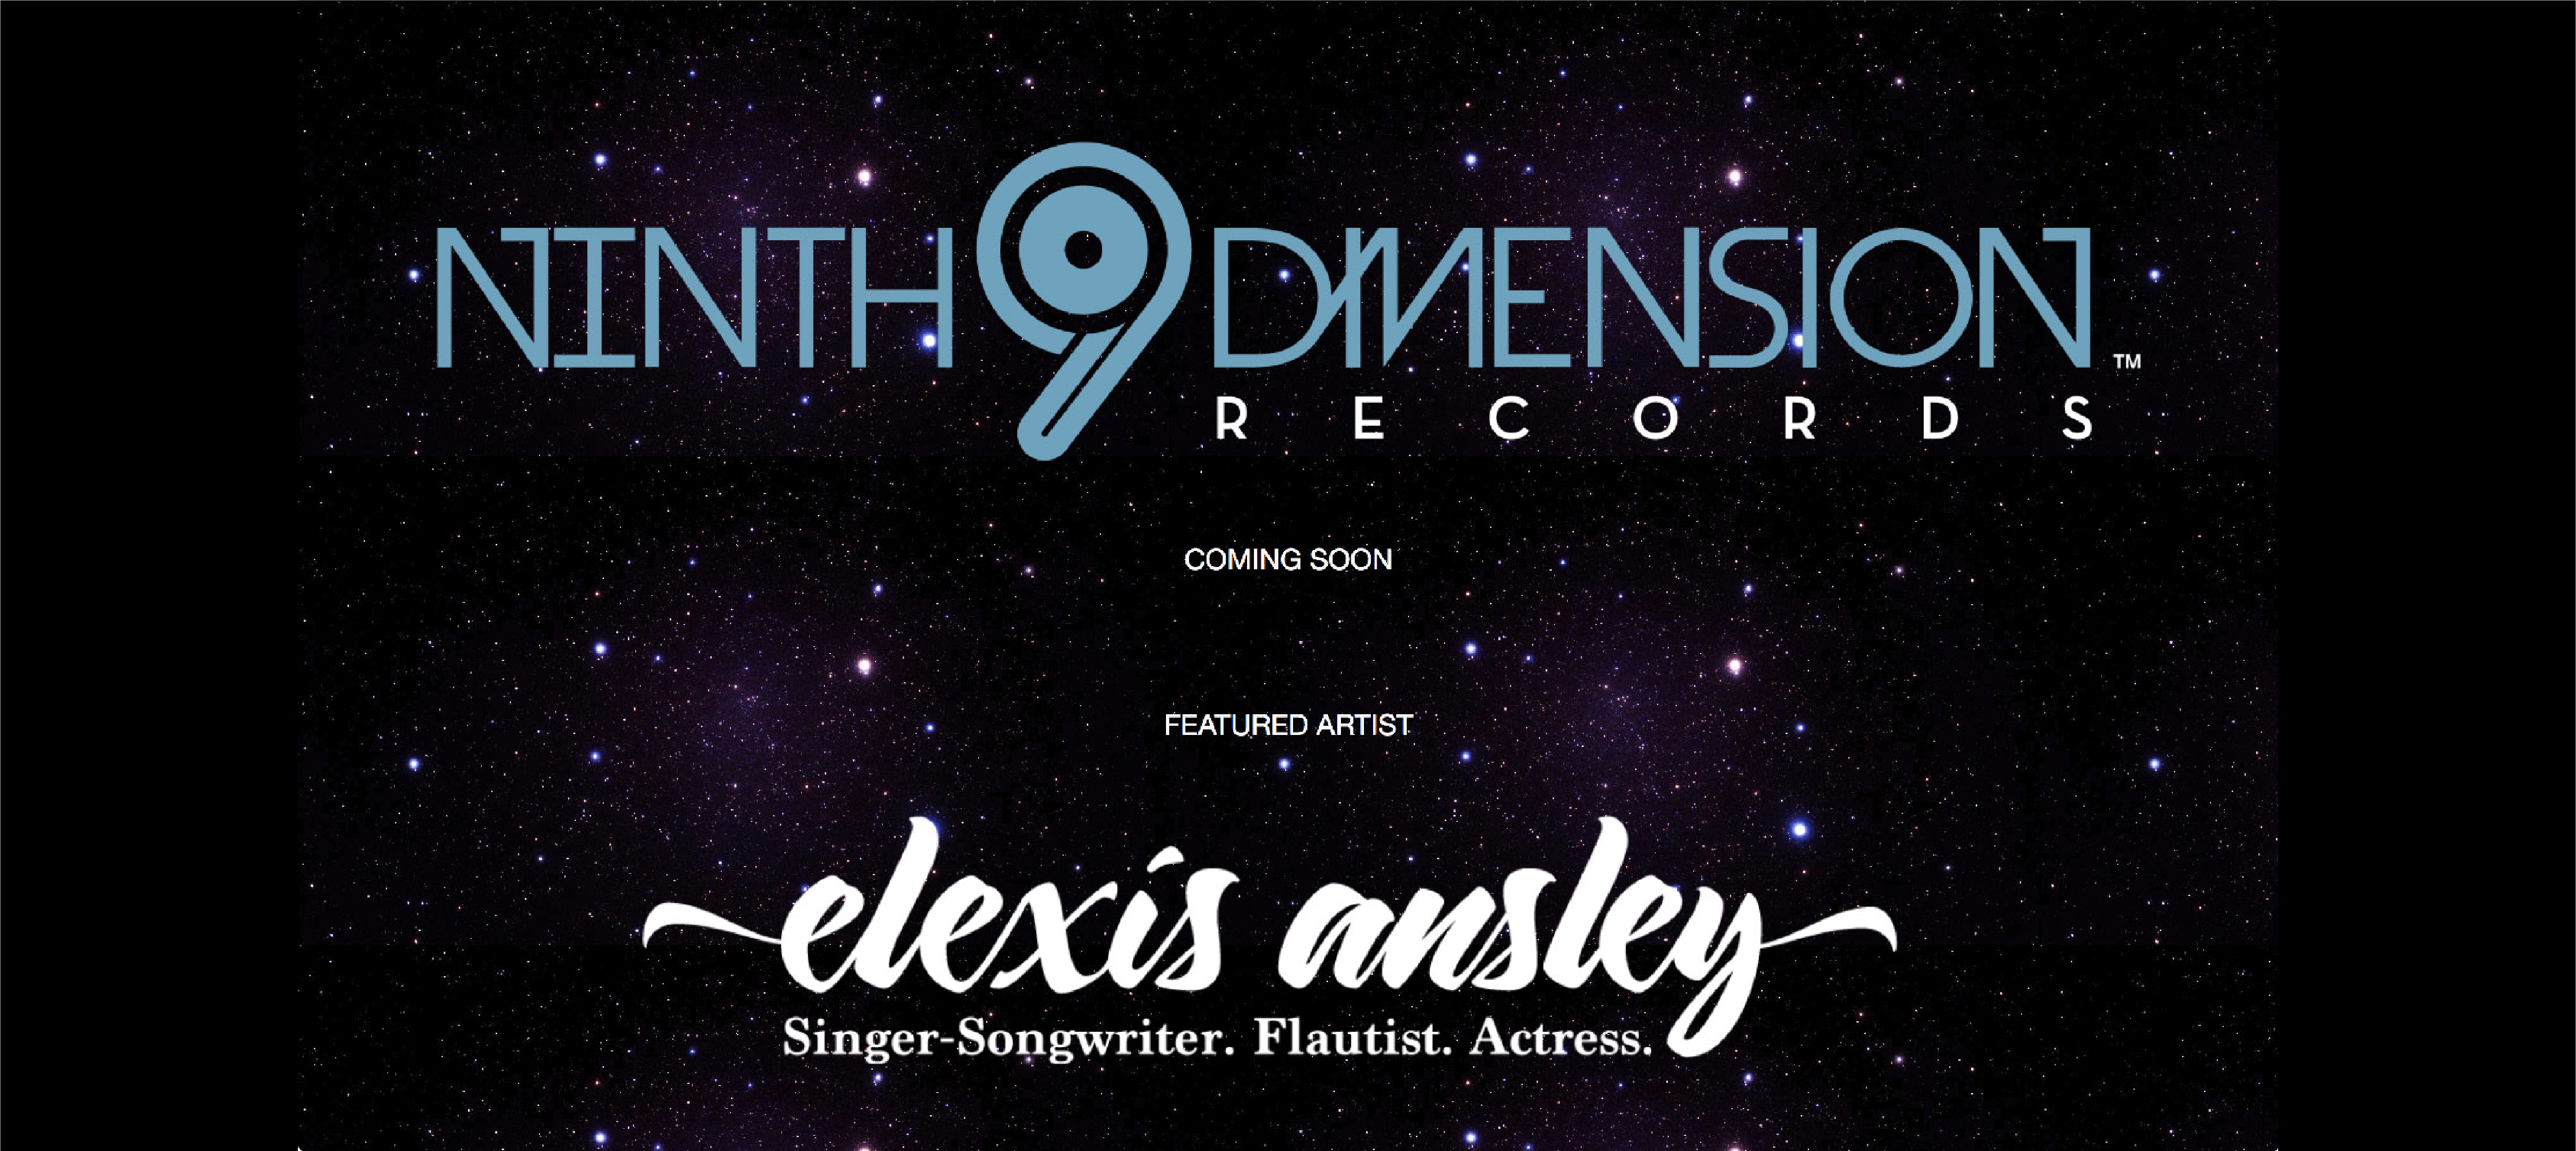 Ninth Dimension Records / https://www.ninthdimensionrecords.com/